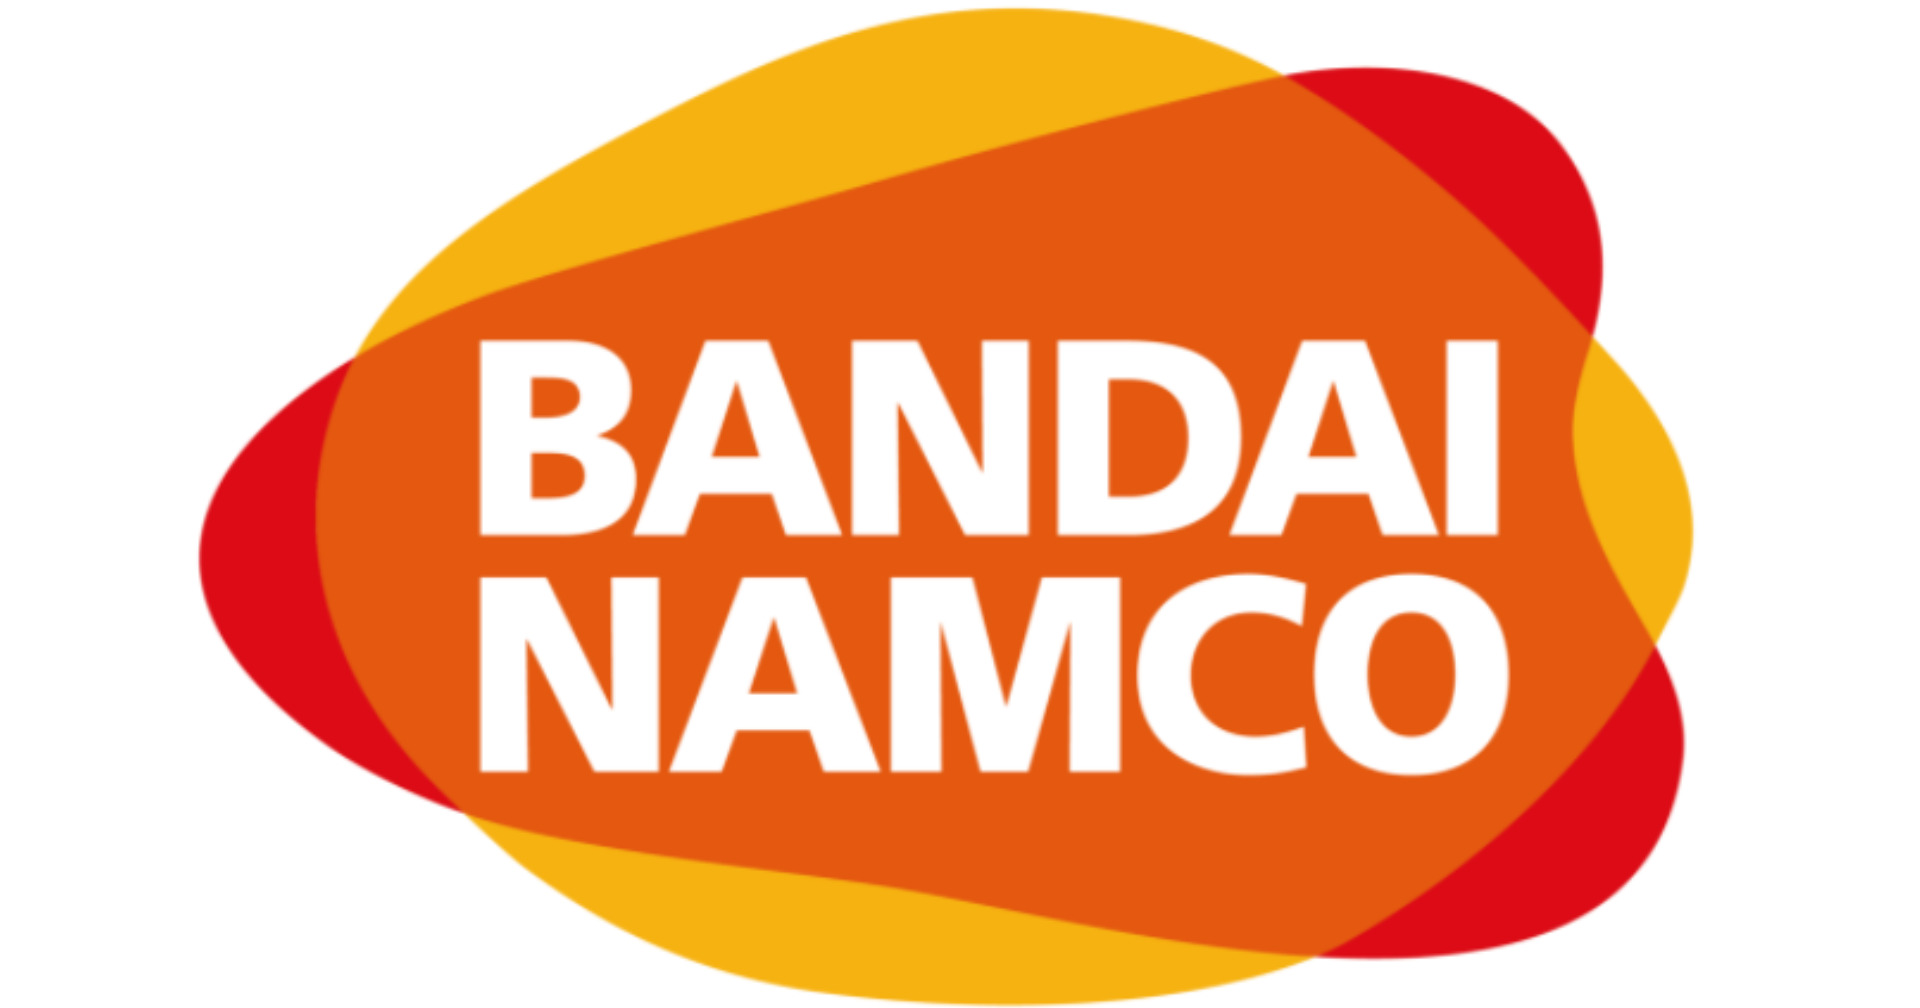 Bandai Namco ออกมายอมรับว่ามีการโจมตีทางไซเบอร์จริง และอยู่ระหว่างการตรวจสอบ